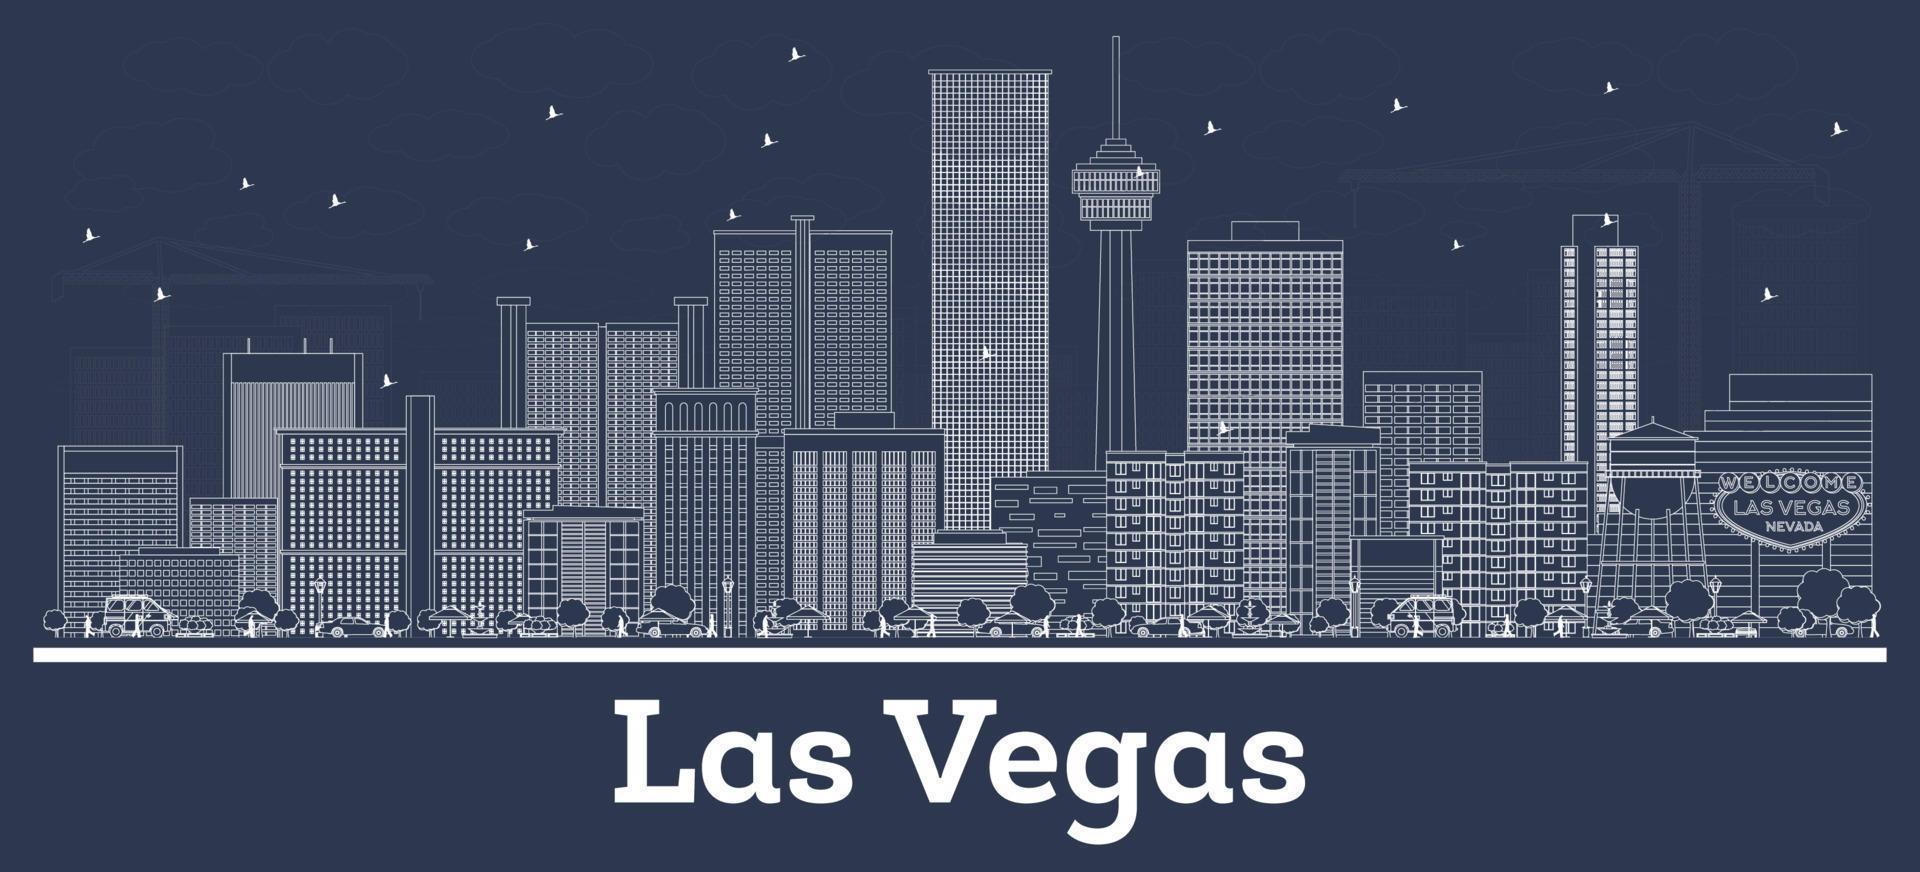 Outline Las Vegas Nevada City Skyline with White Buildings. vector